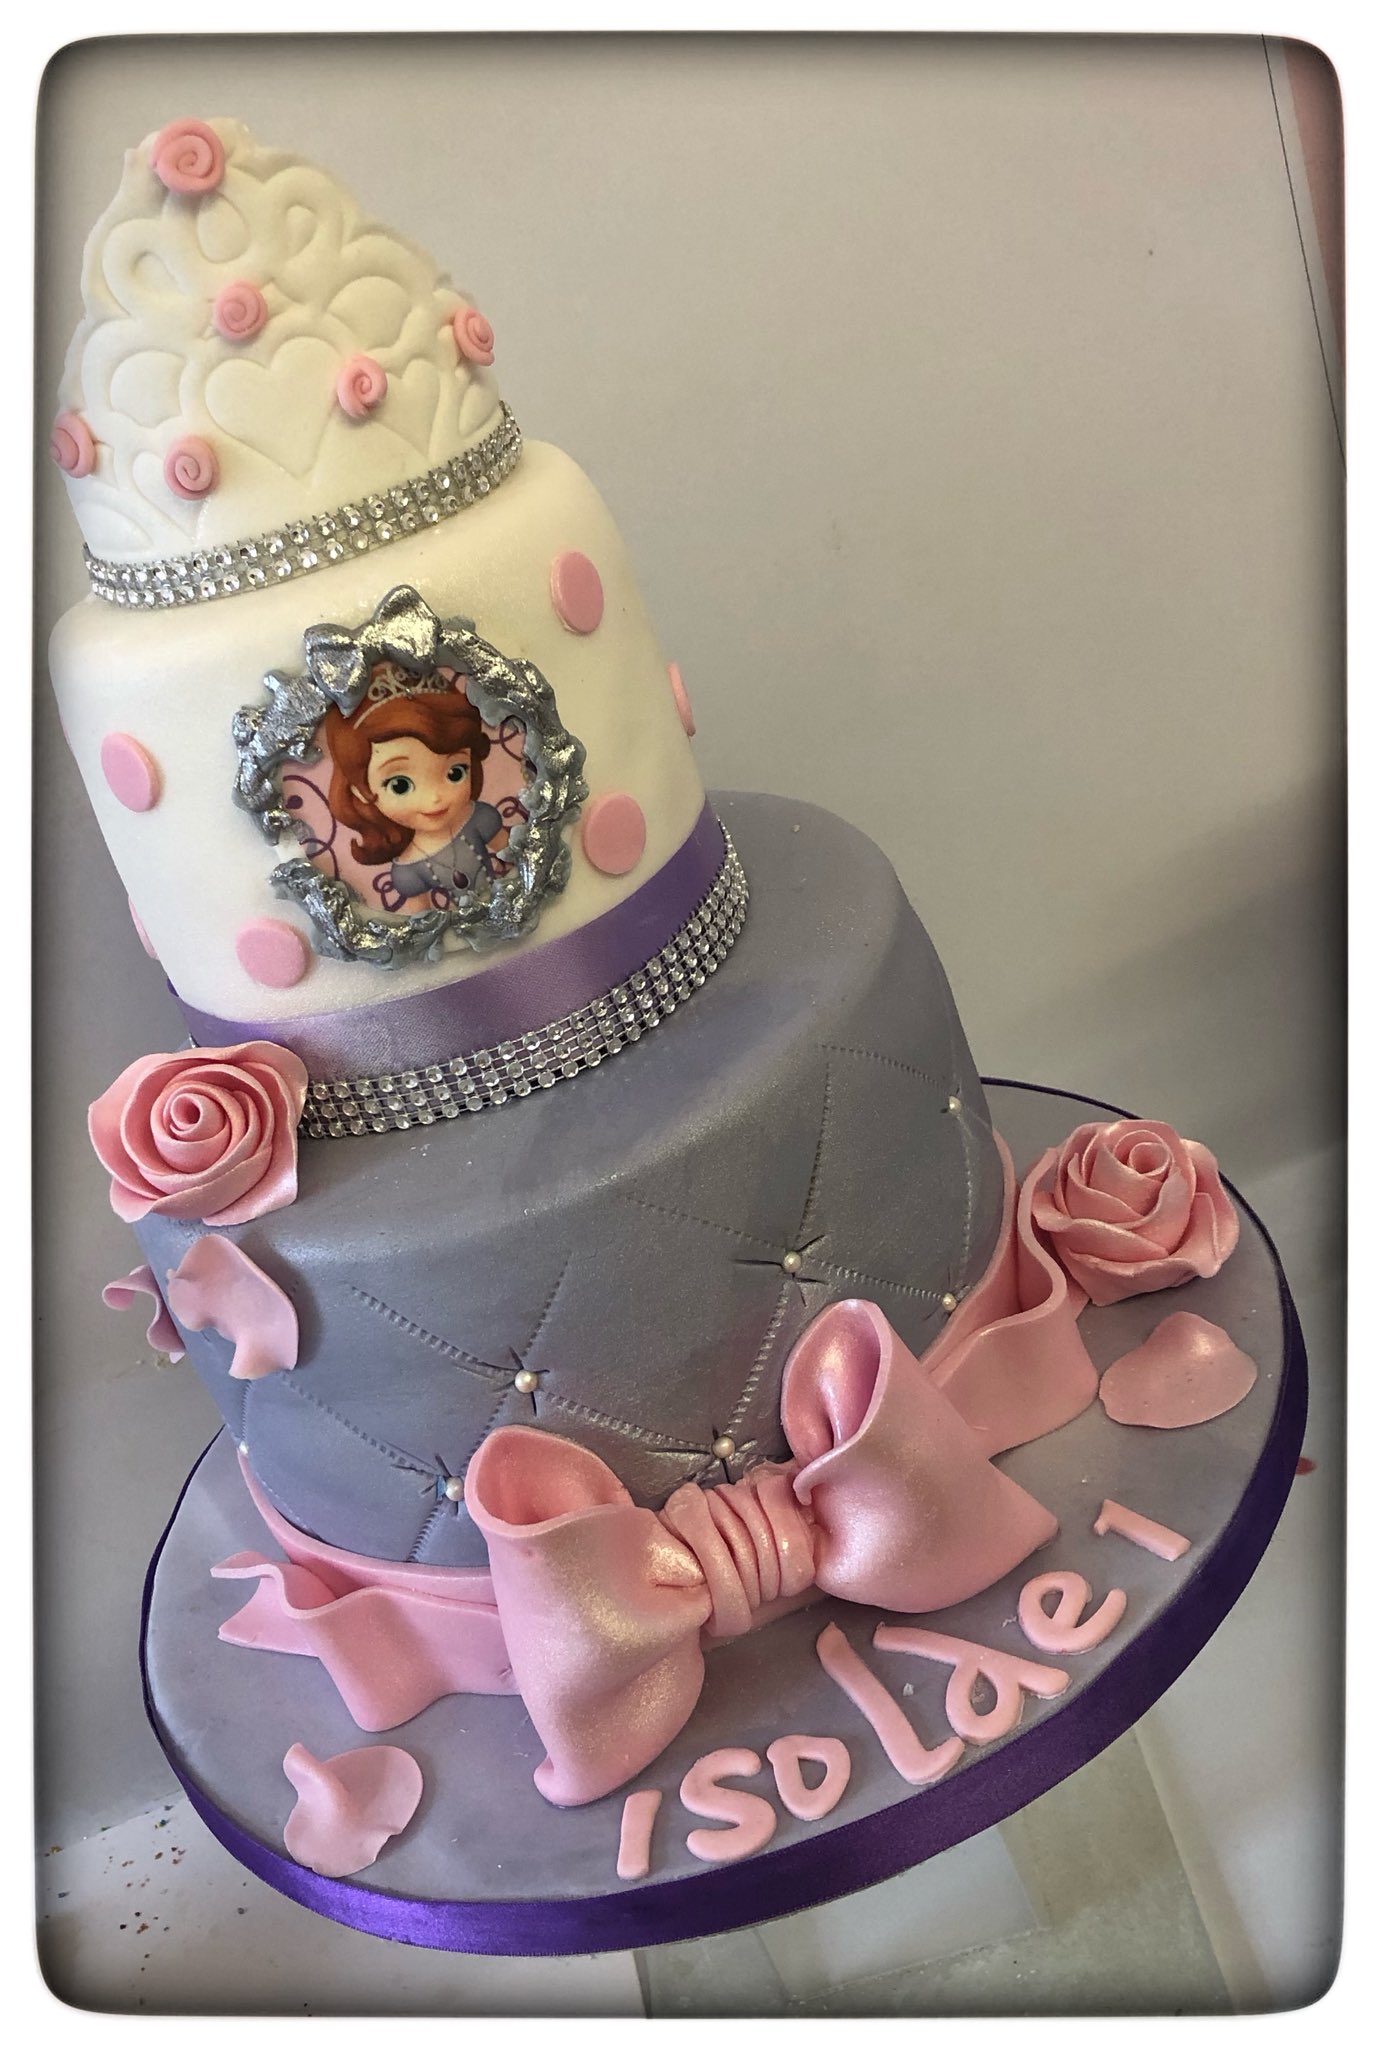 3D Princess Cake | MyBakeStudio